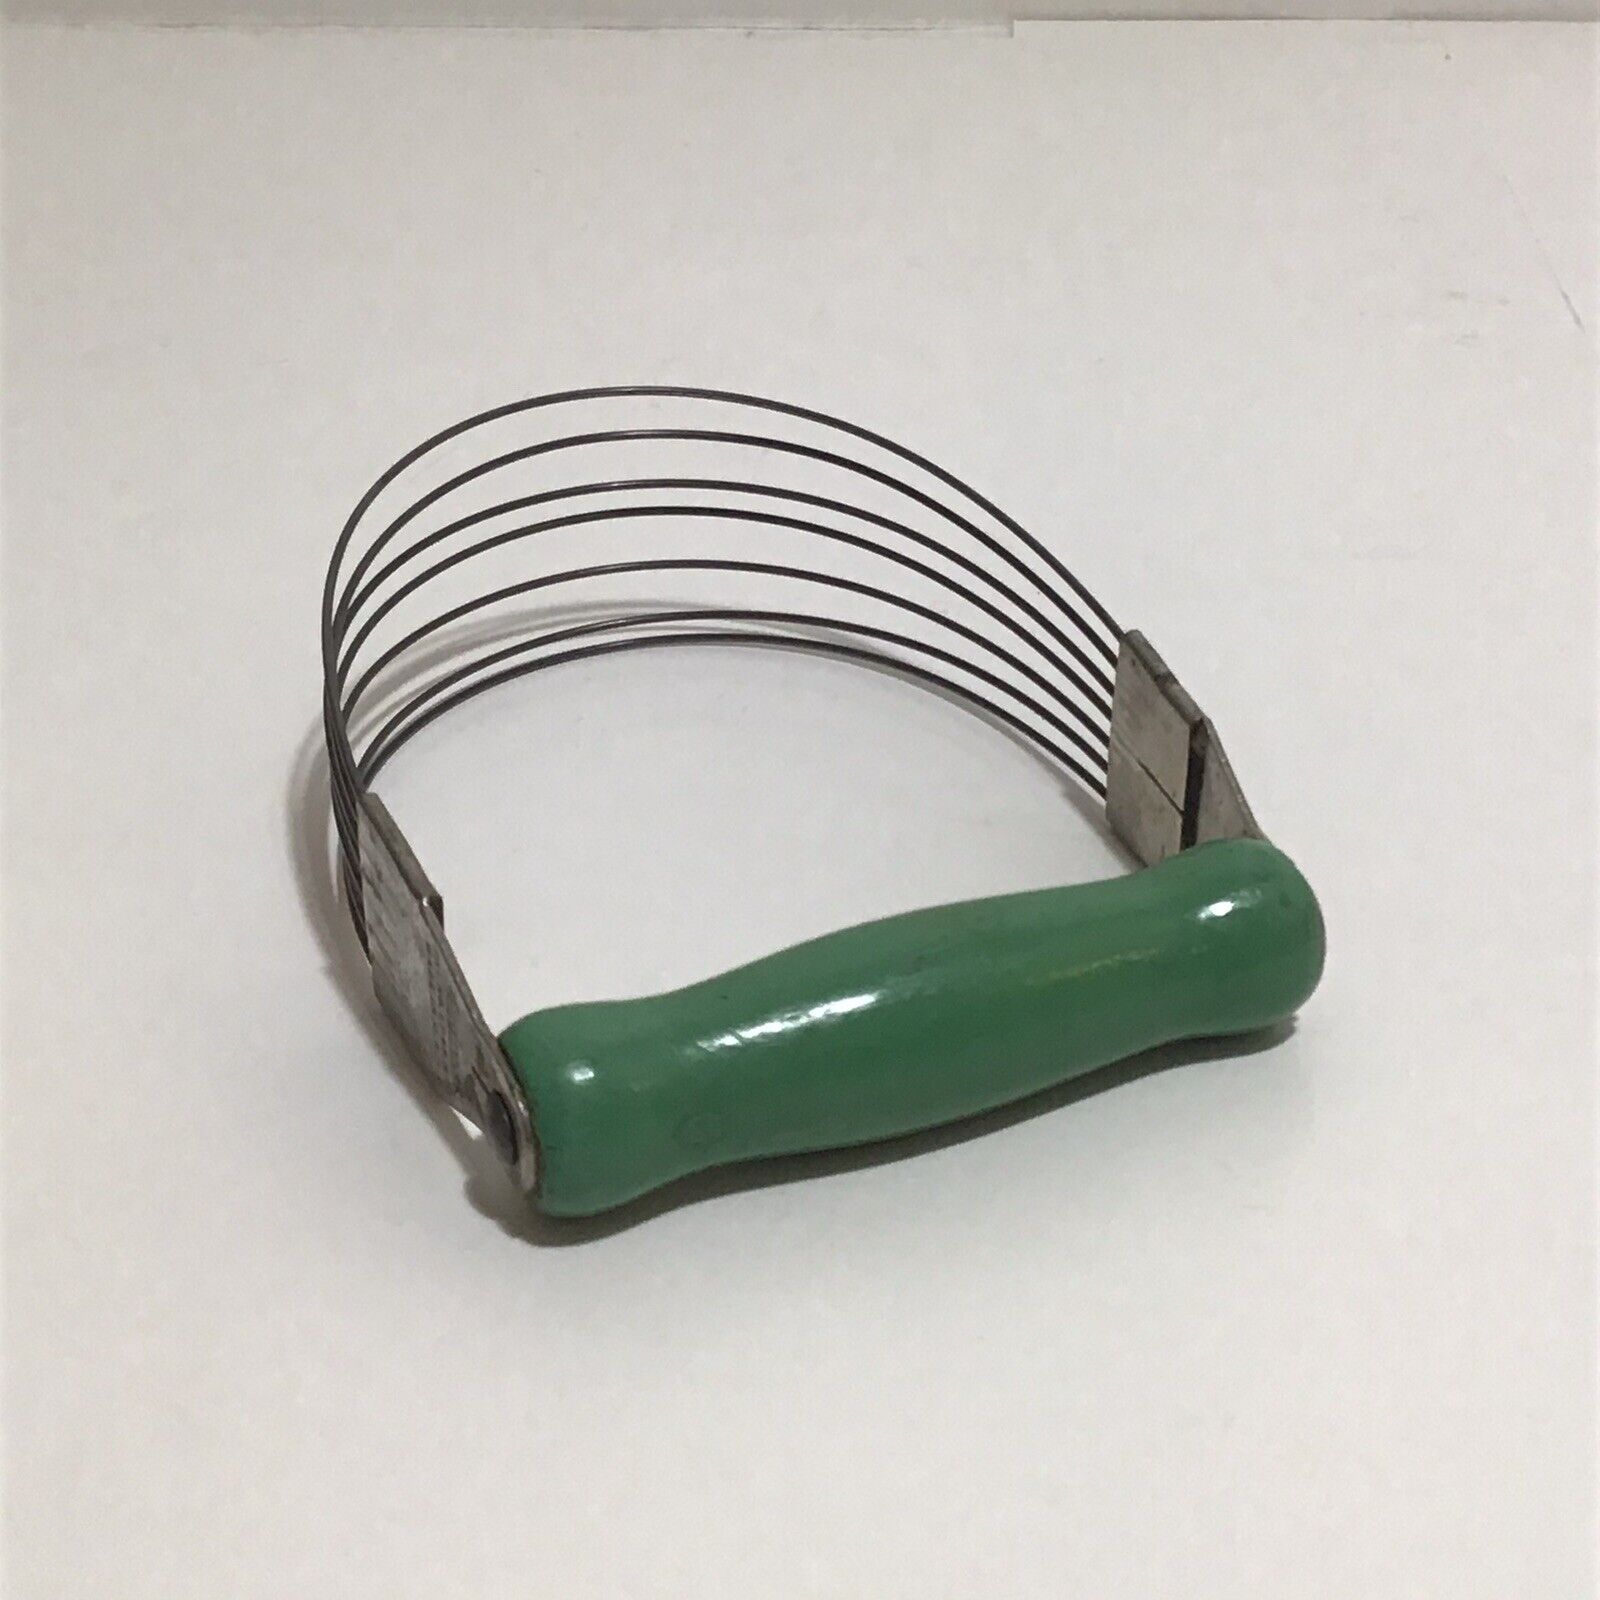 Vintage Androck Green Wood Handle Metal Wire Whisk Kitchen Pastry Blender